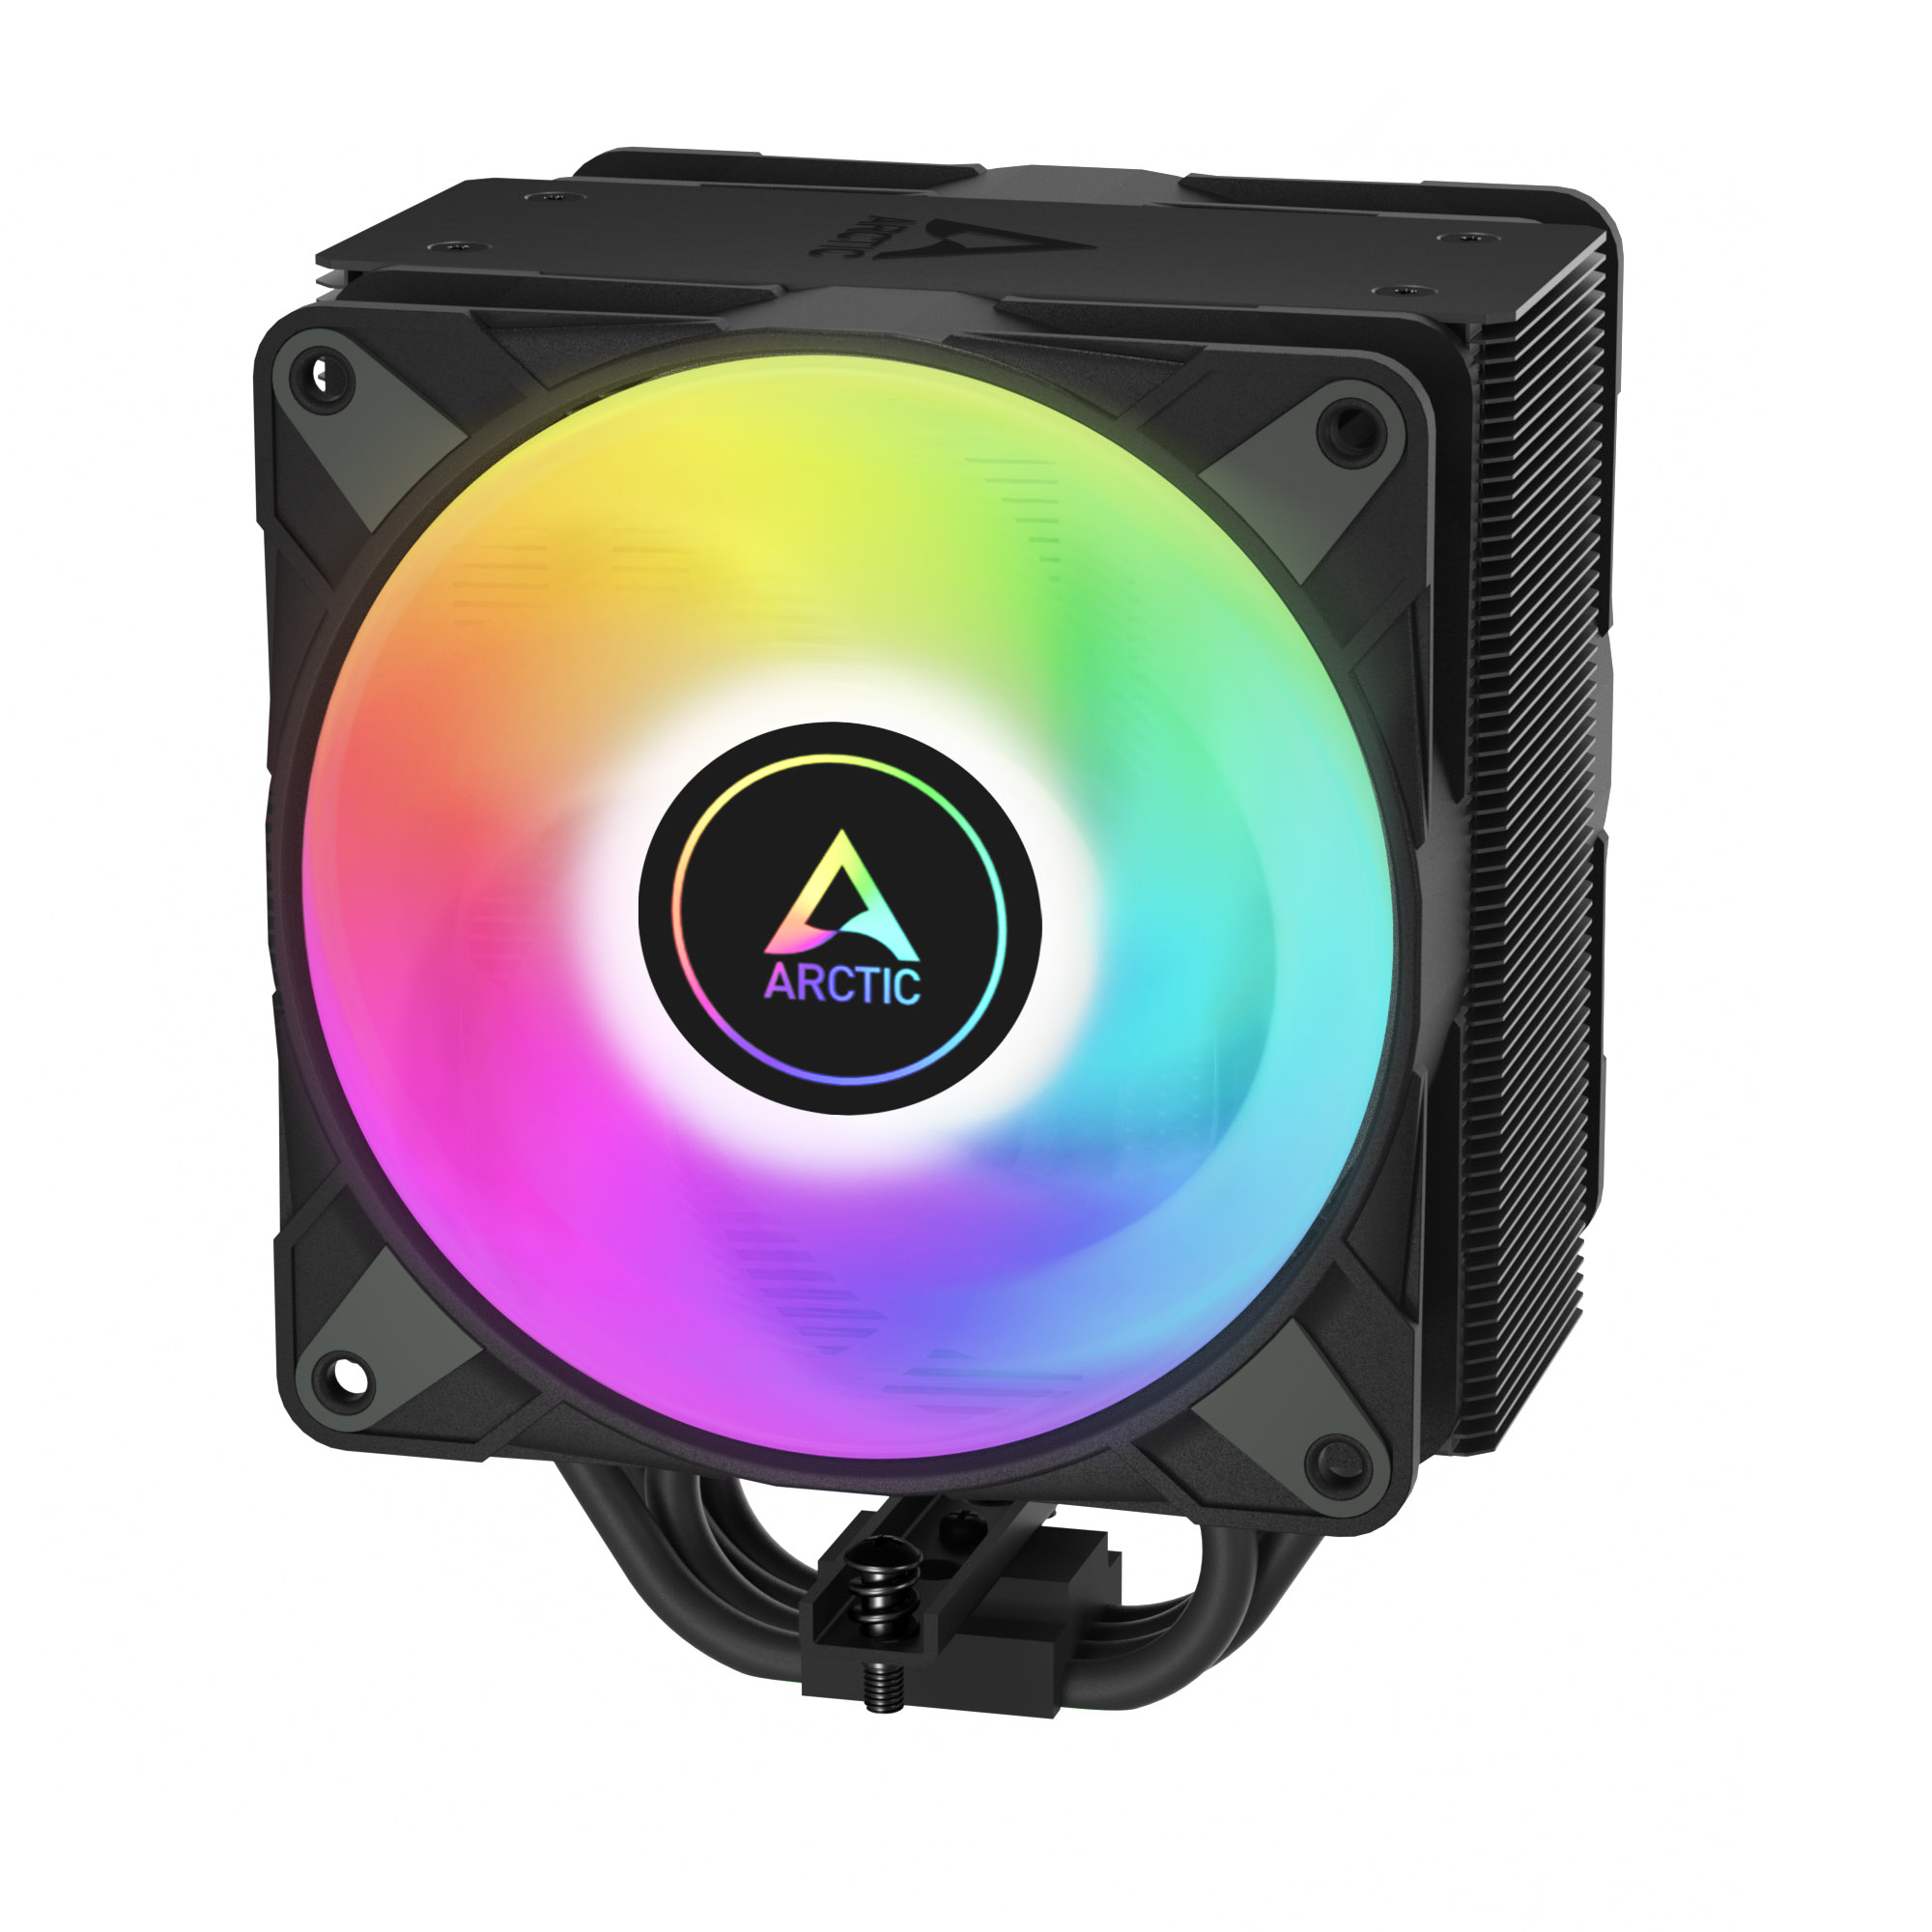 ARCTIC Freezer 36 A-RGB (Black) – Black CPU Cooler for Intel Socket LG